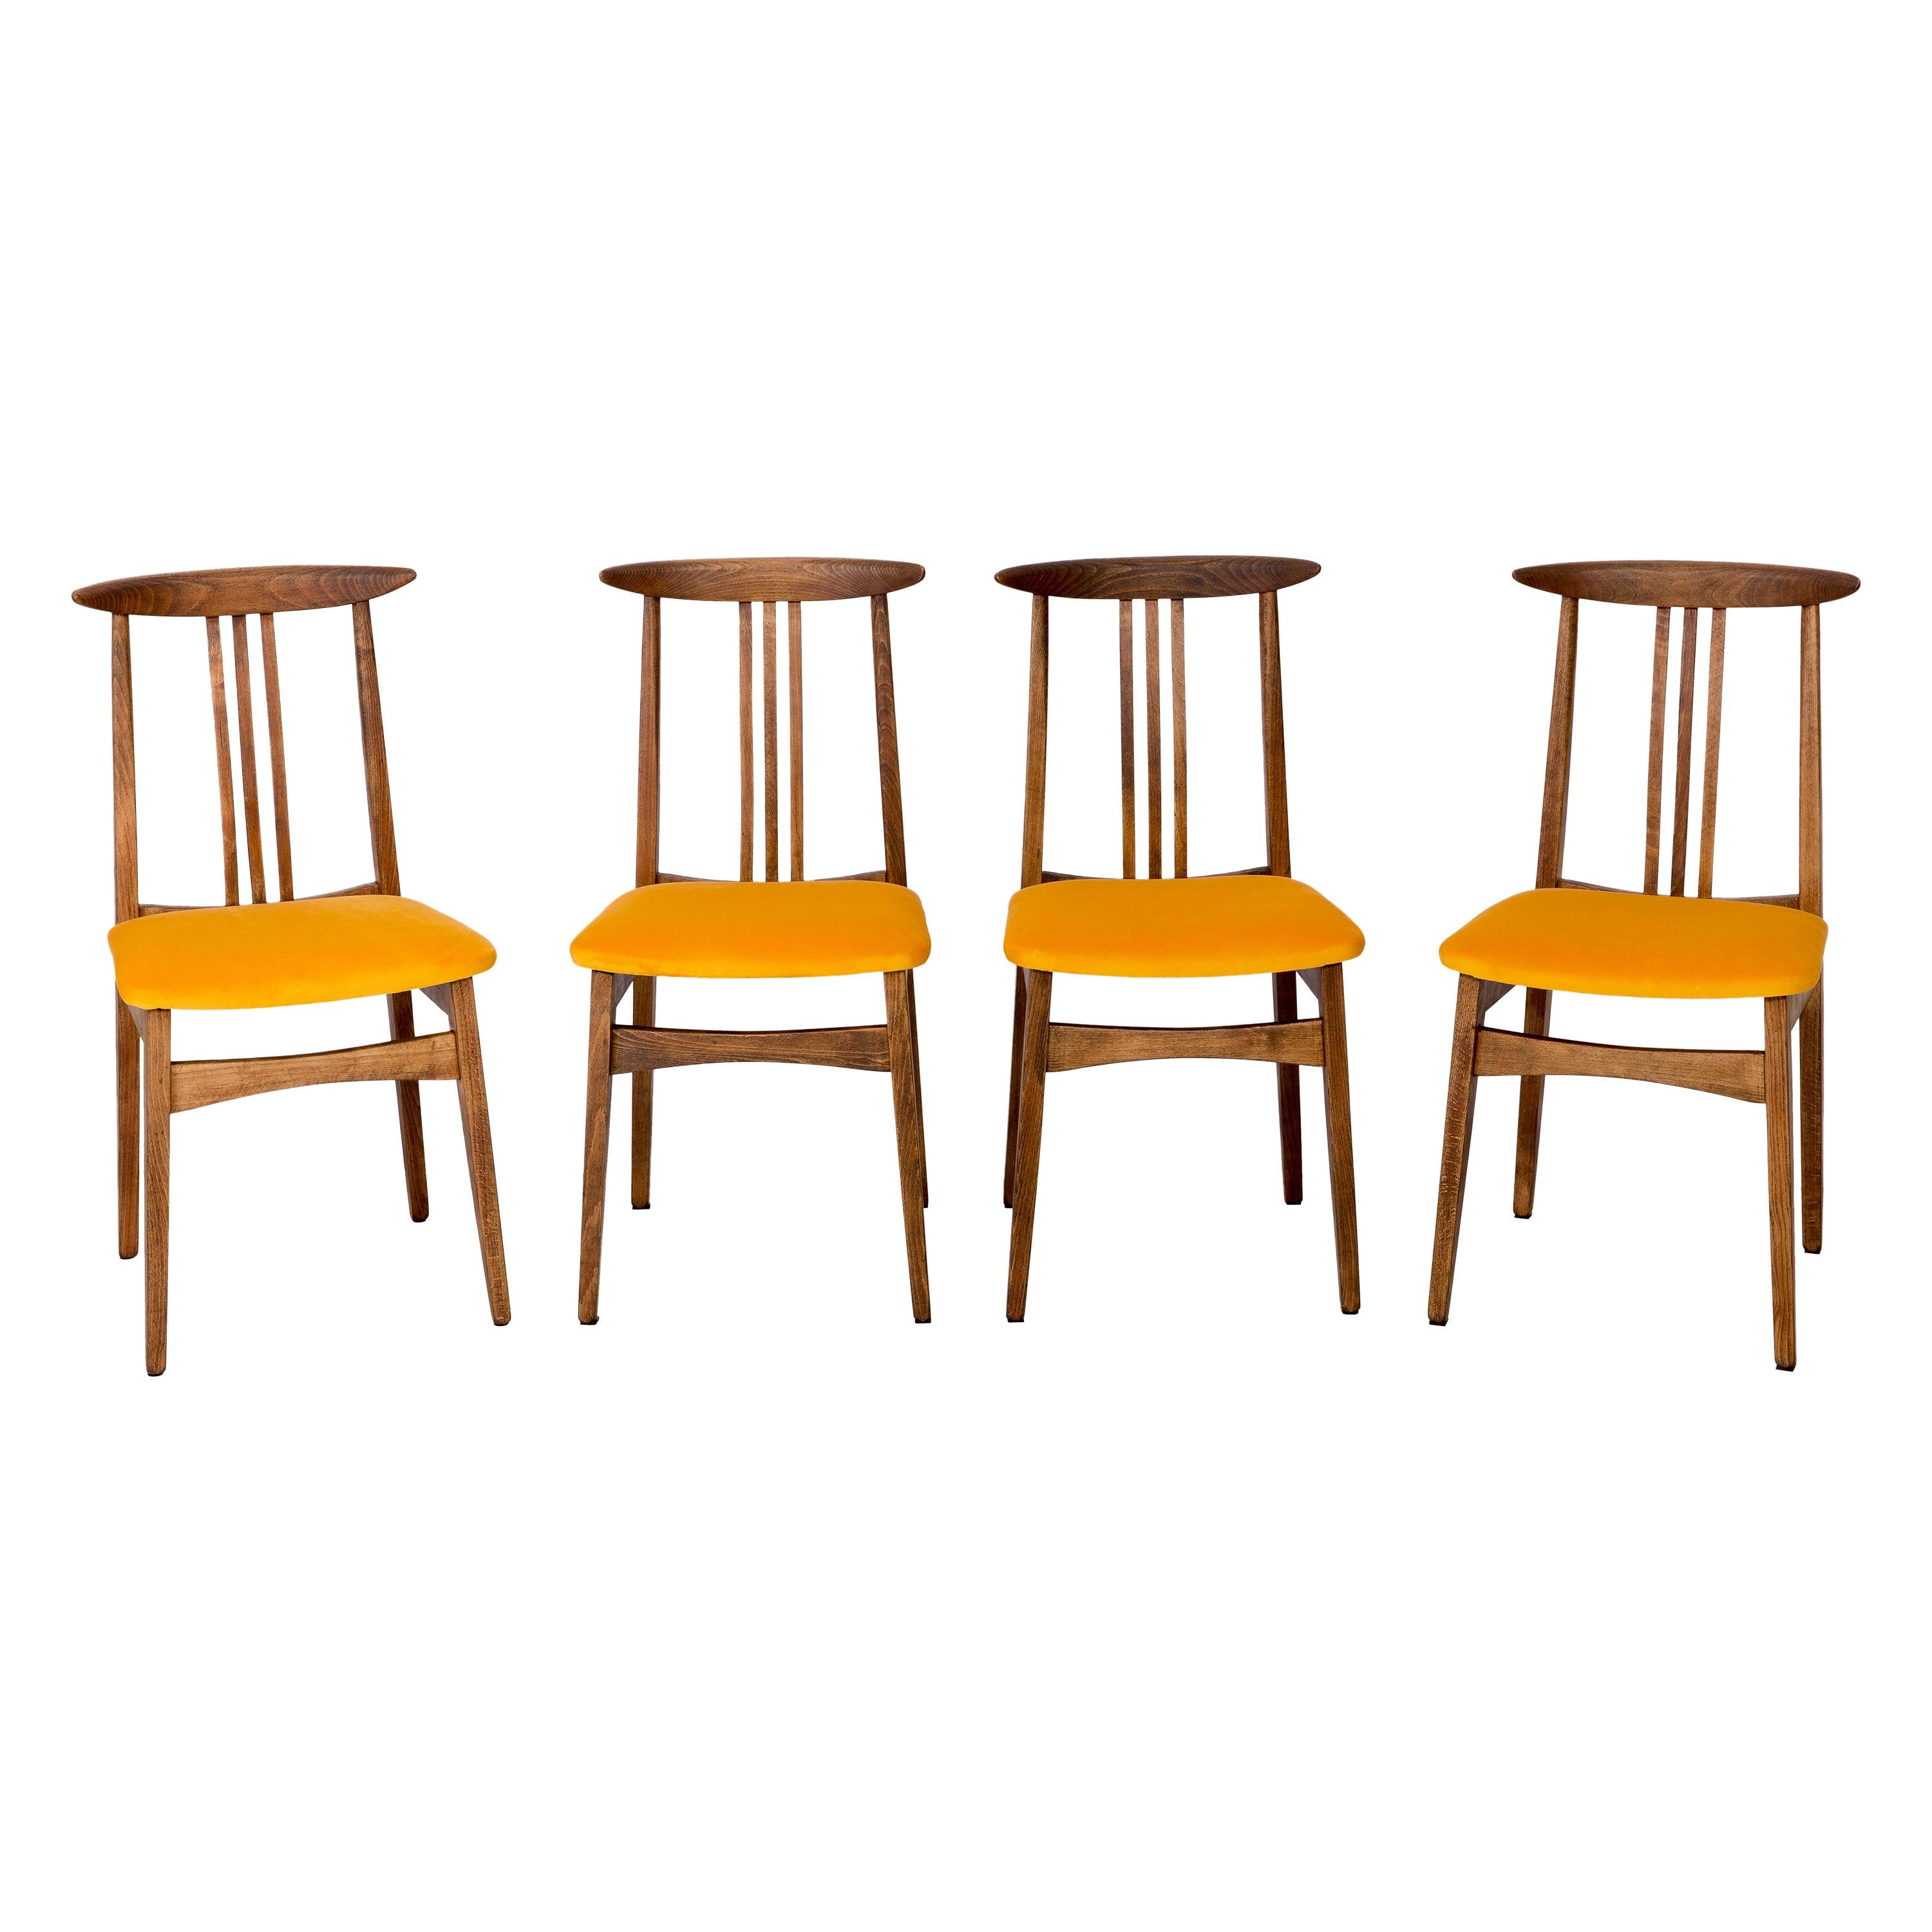 Set of Four Yellow Chairs, by Zielinski, Poland, 1960s